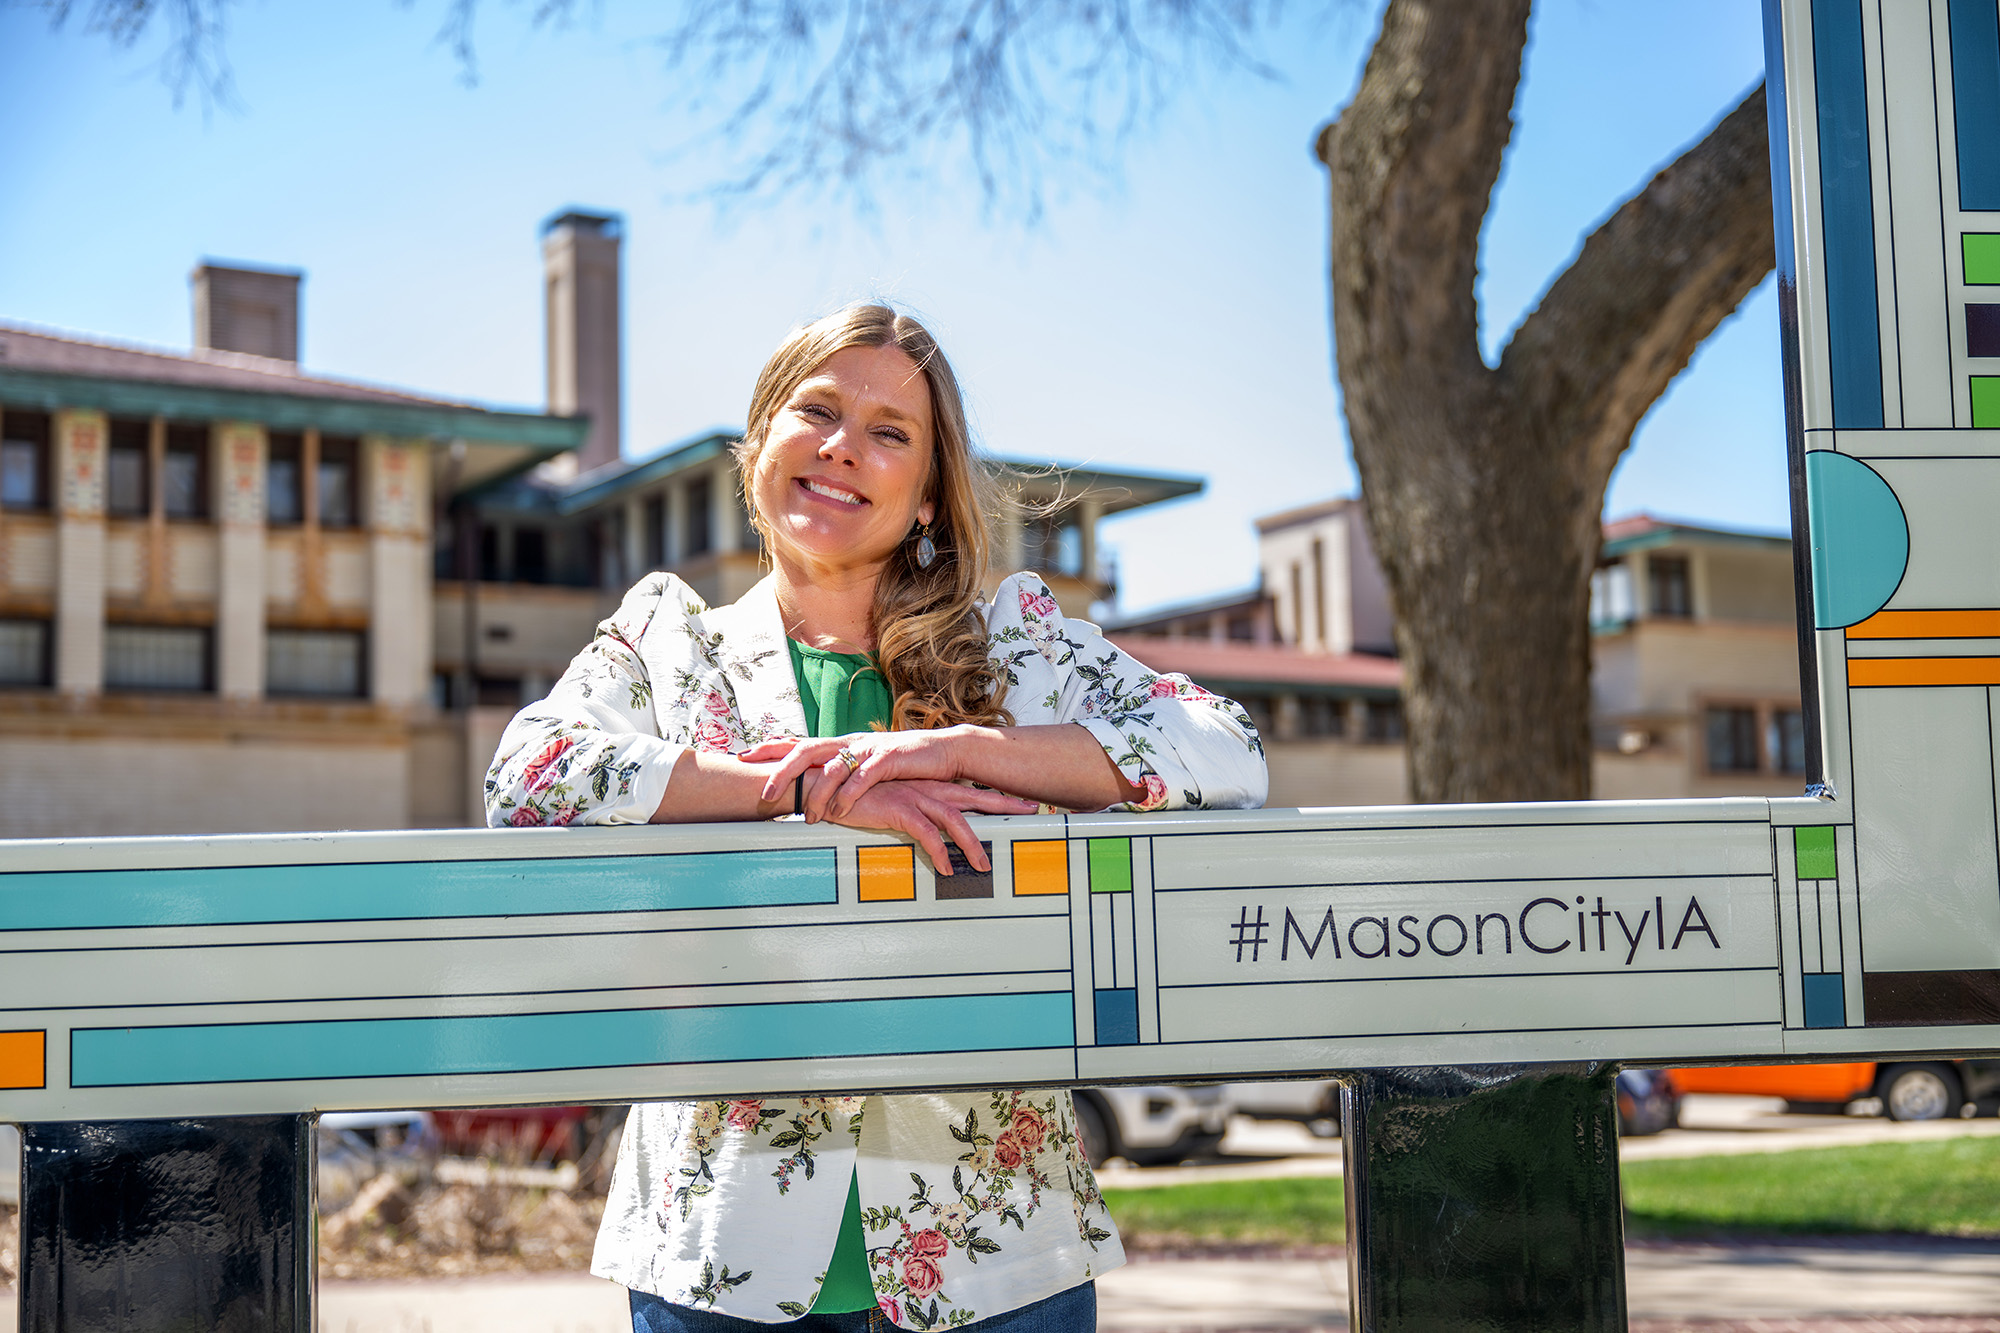 a woman posing for a photo near signage that touts Mason City